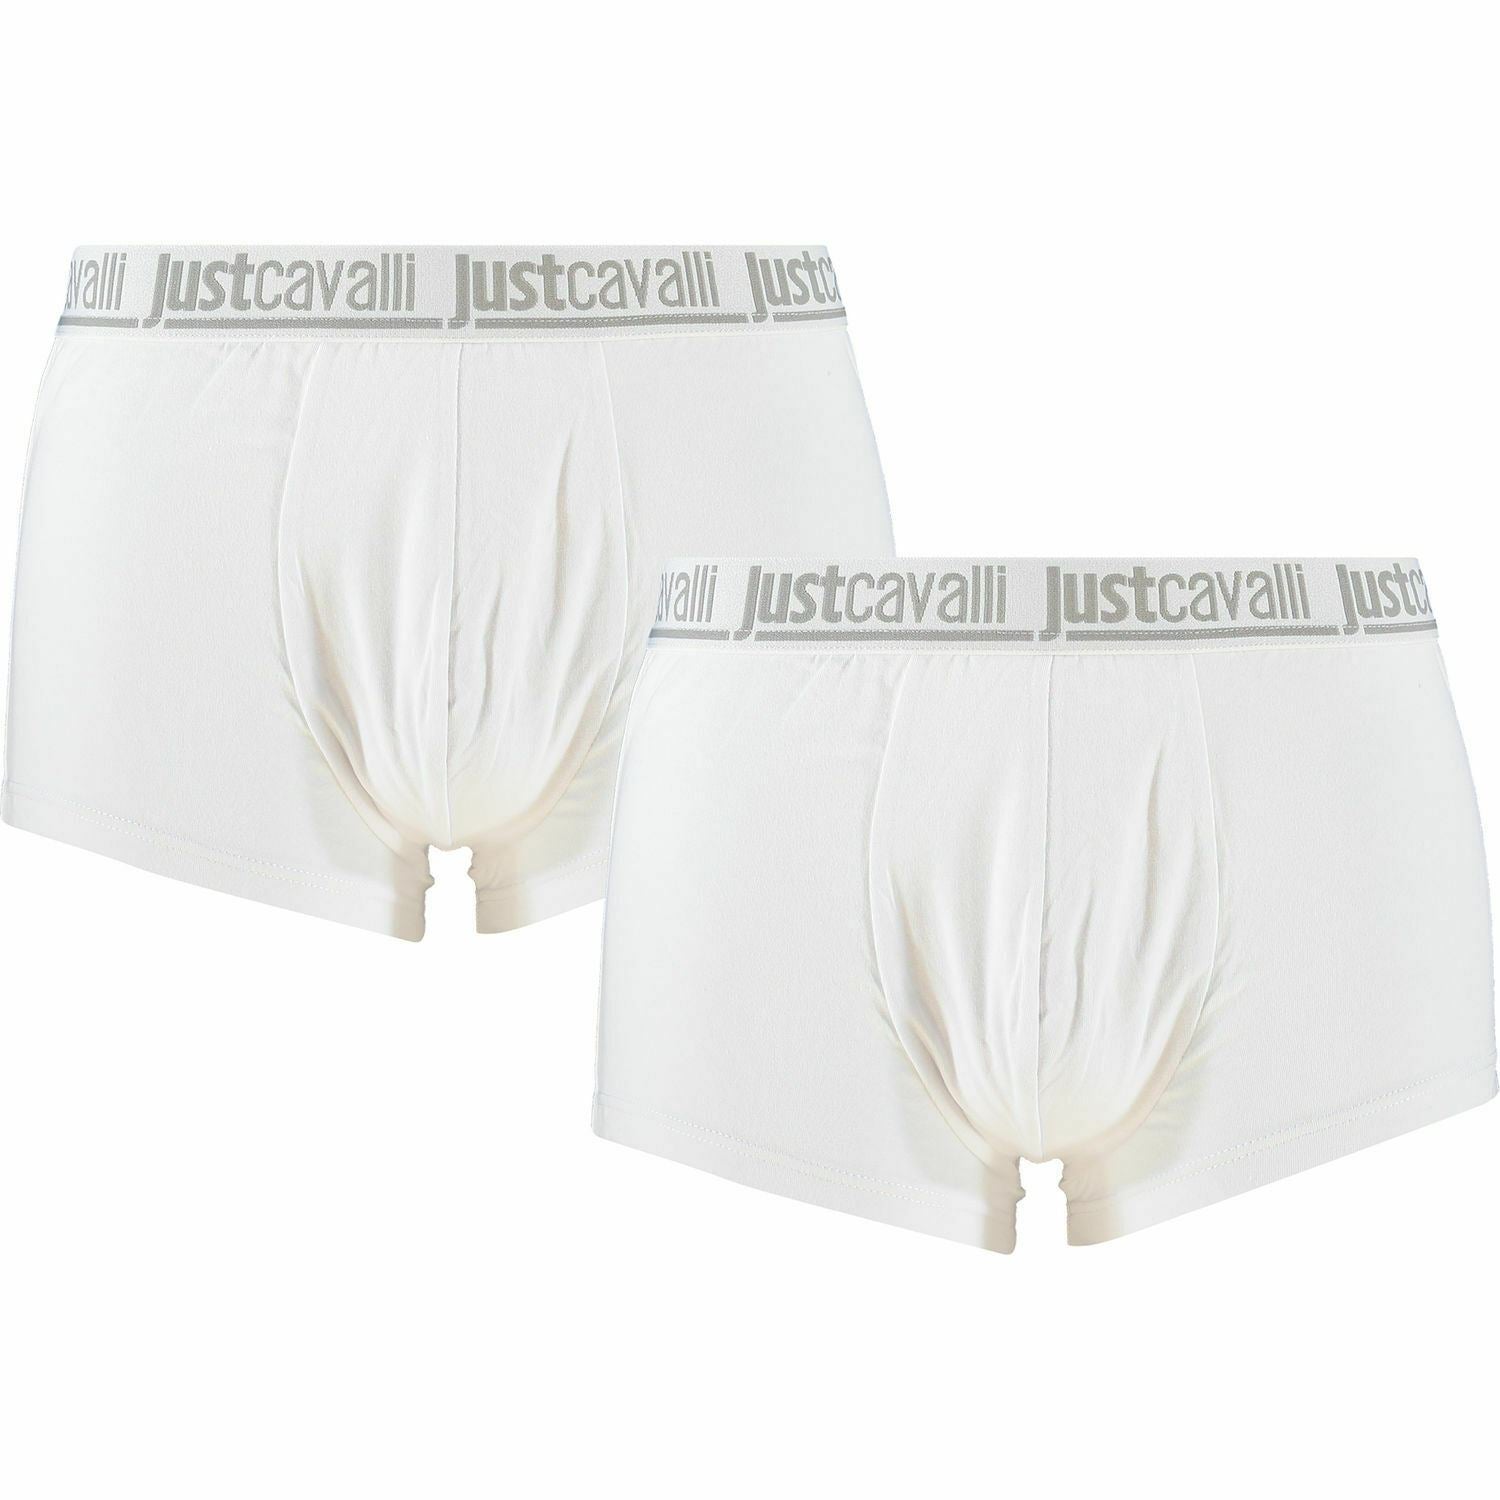 JUST CAVALLI Men's 2pack White Logo Boxer Shorts Trunks size M size L size XL